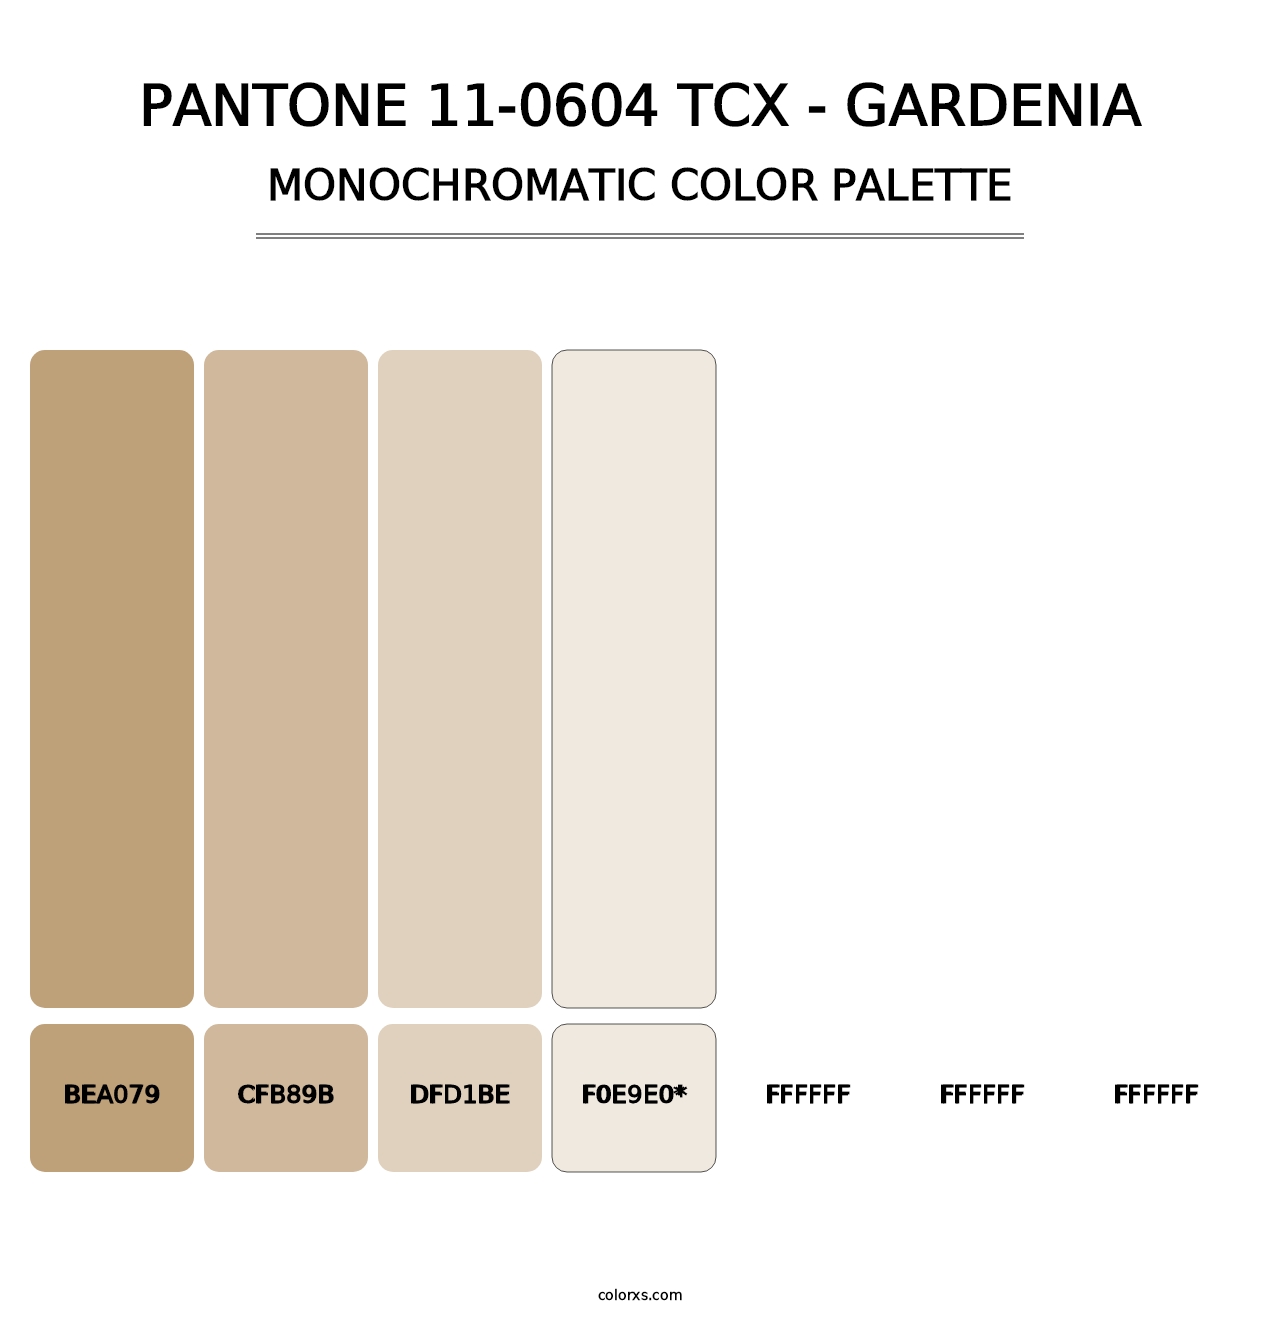 PANTONE 11-0604 TCX - Gardenia - Monochromatic Color Palette